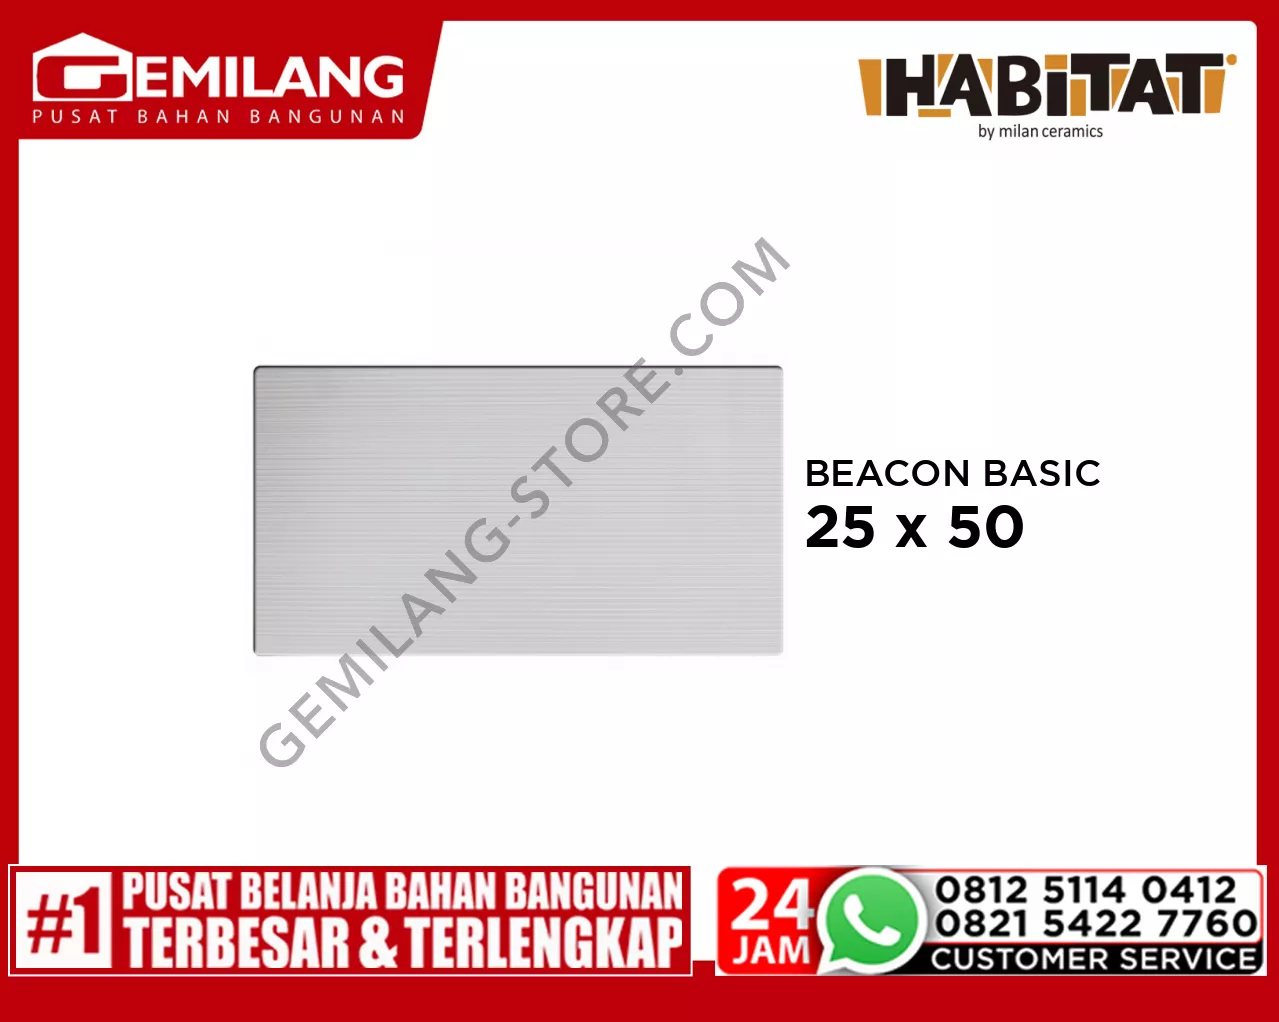 HABITAT BEACON BASIC 25 x 50